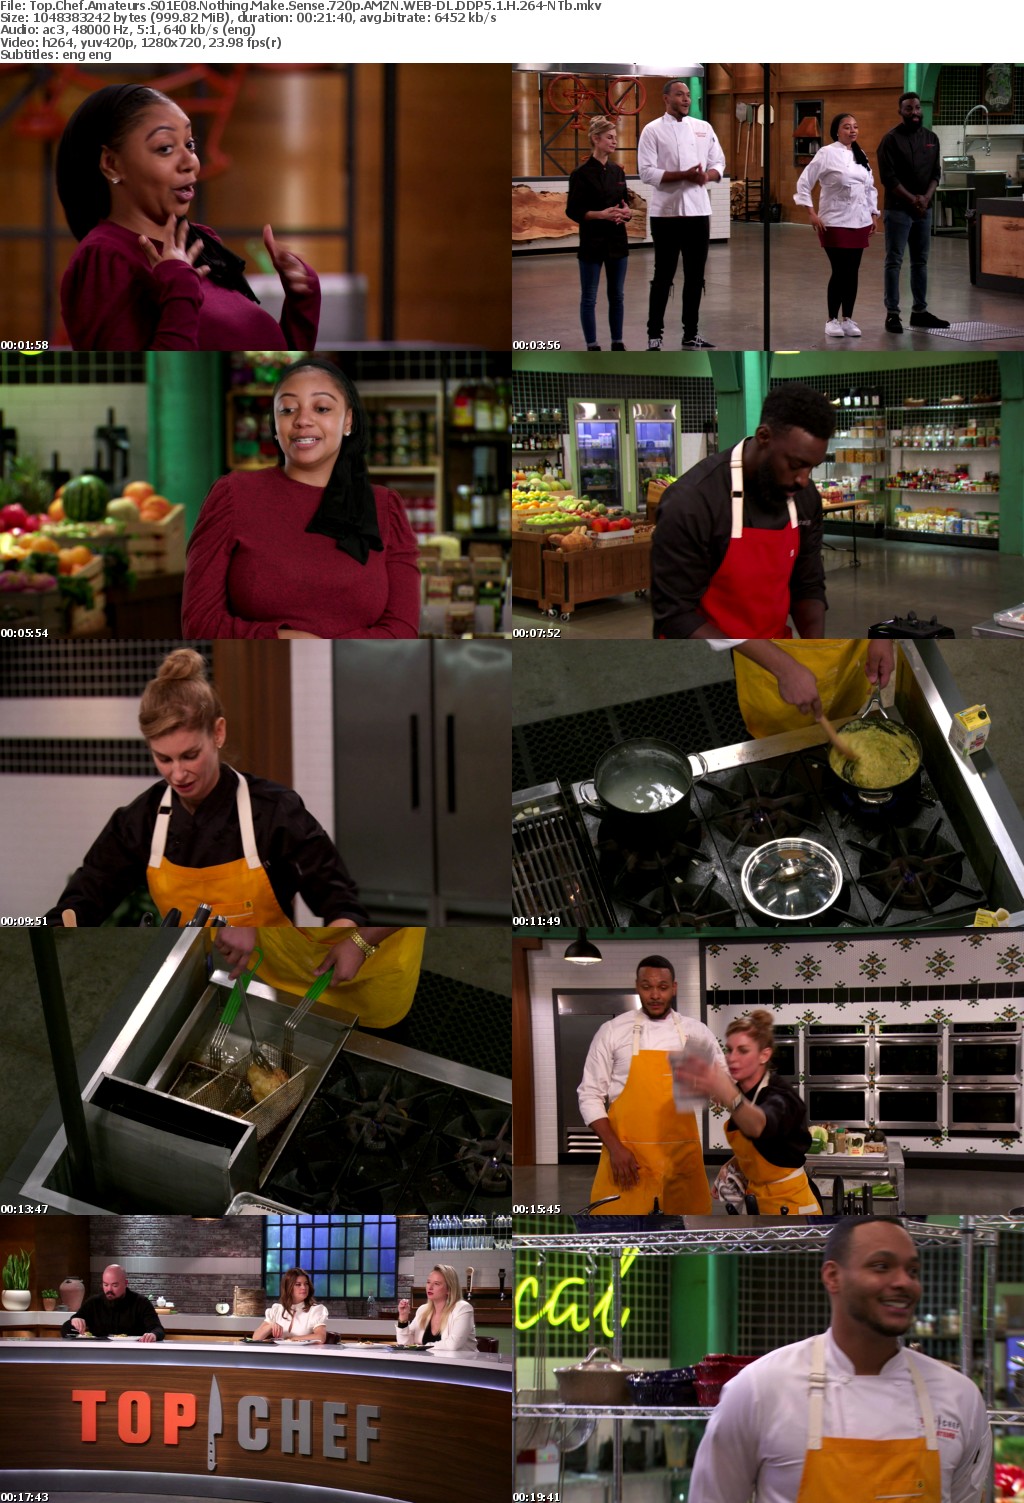 Top Chef Amateurs S01E08 Nothing Make Sense 720p AMZN WEBRip DDP5 1 x264-NTb